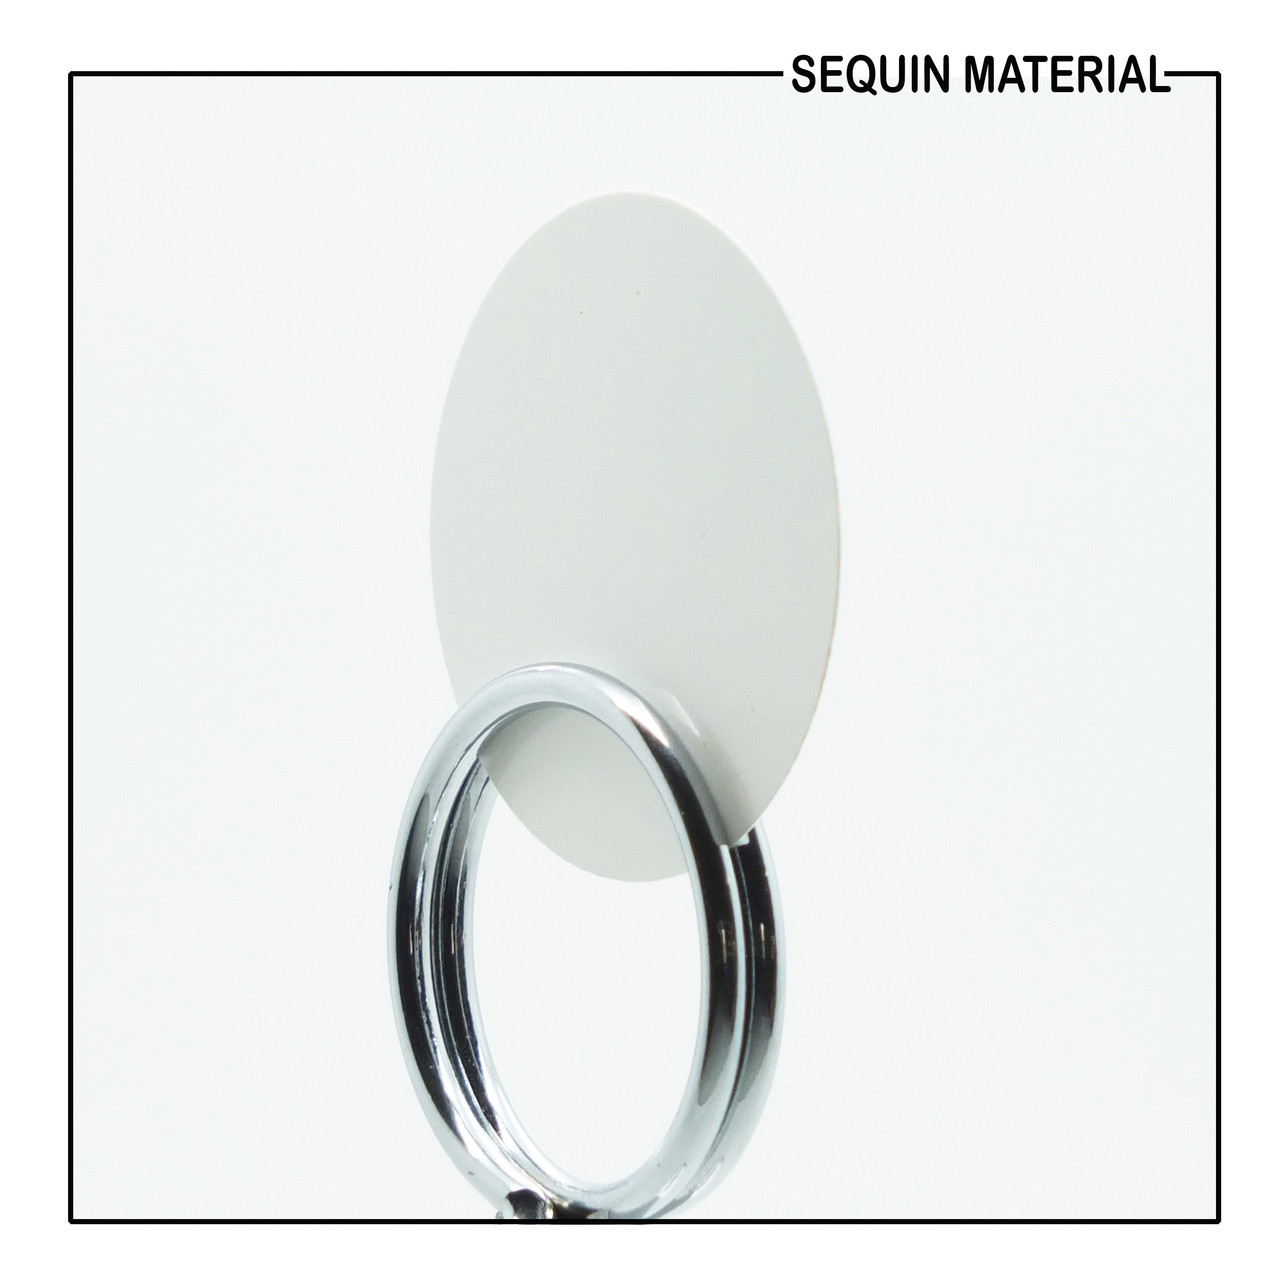 SequinsUSA Scallop Shell Ocean Sealife  Opaque Print Sequin Film RL209